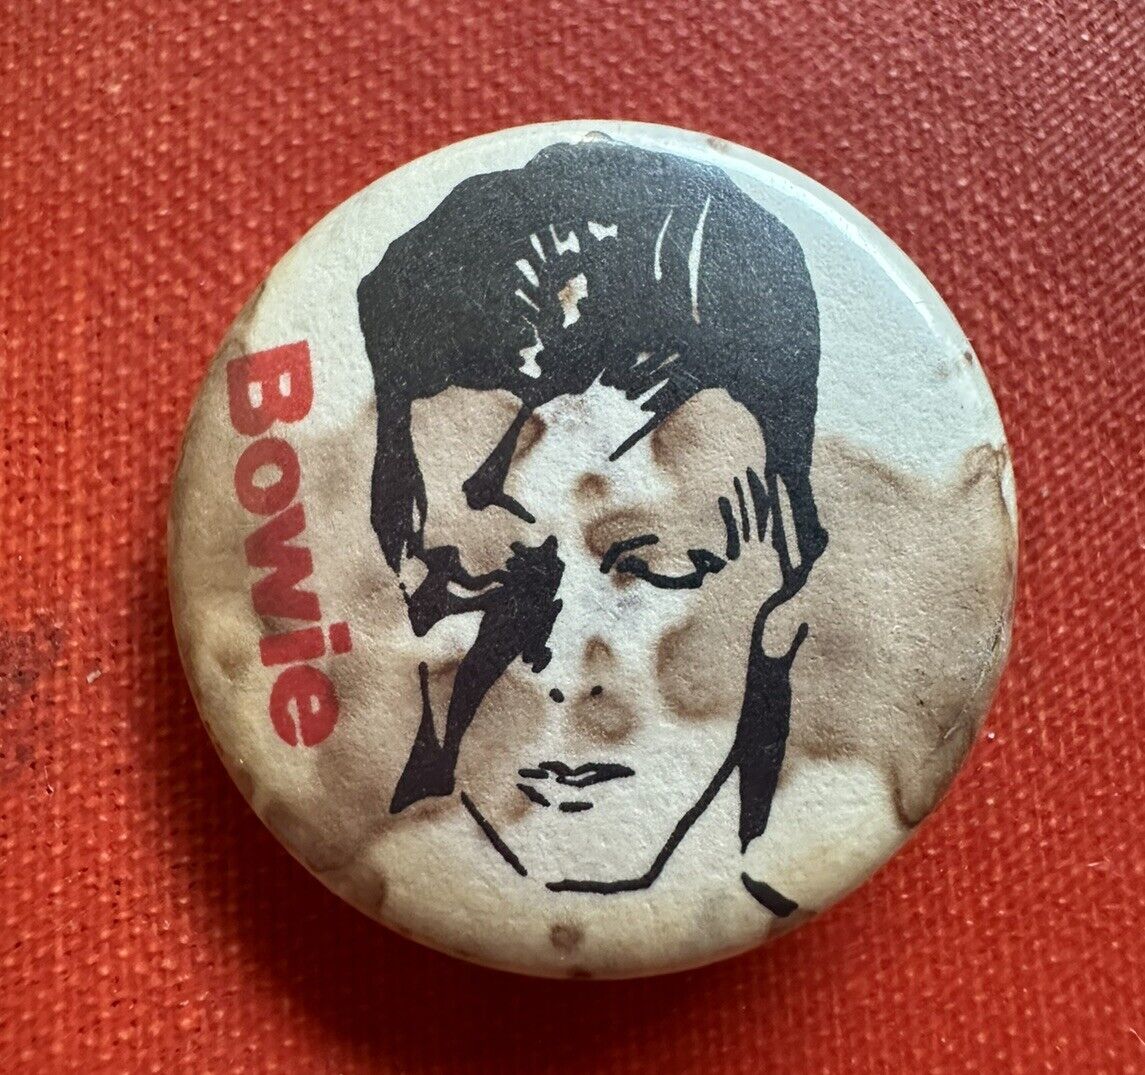 Vintage David Bowie Aladdin Sane pin button badge ( as is )